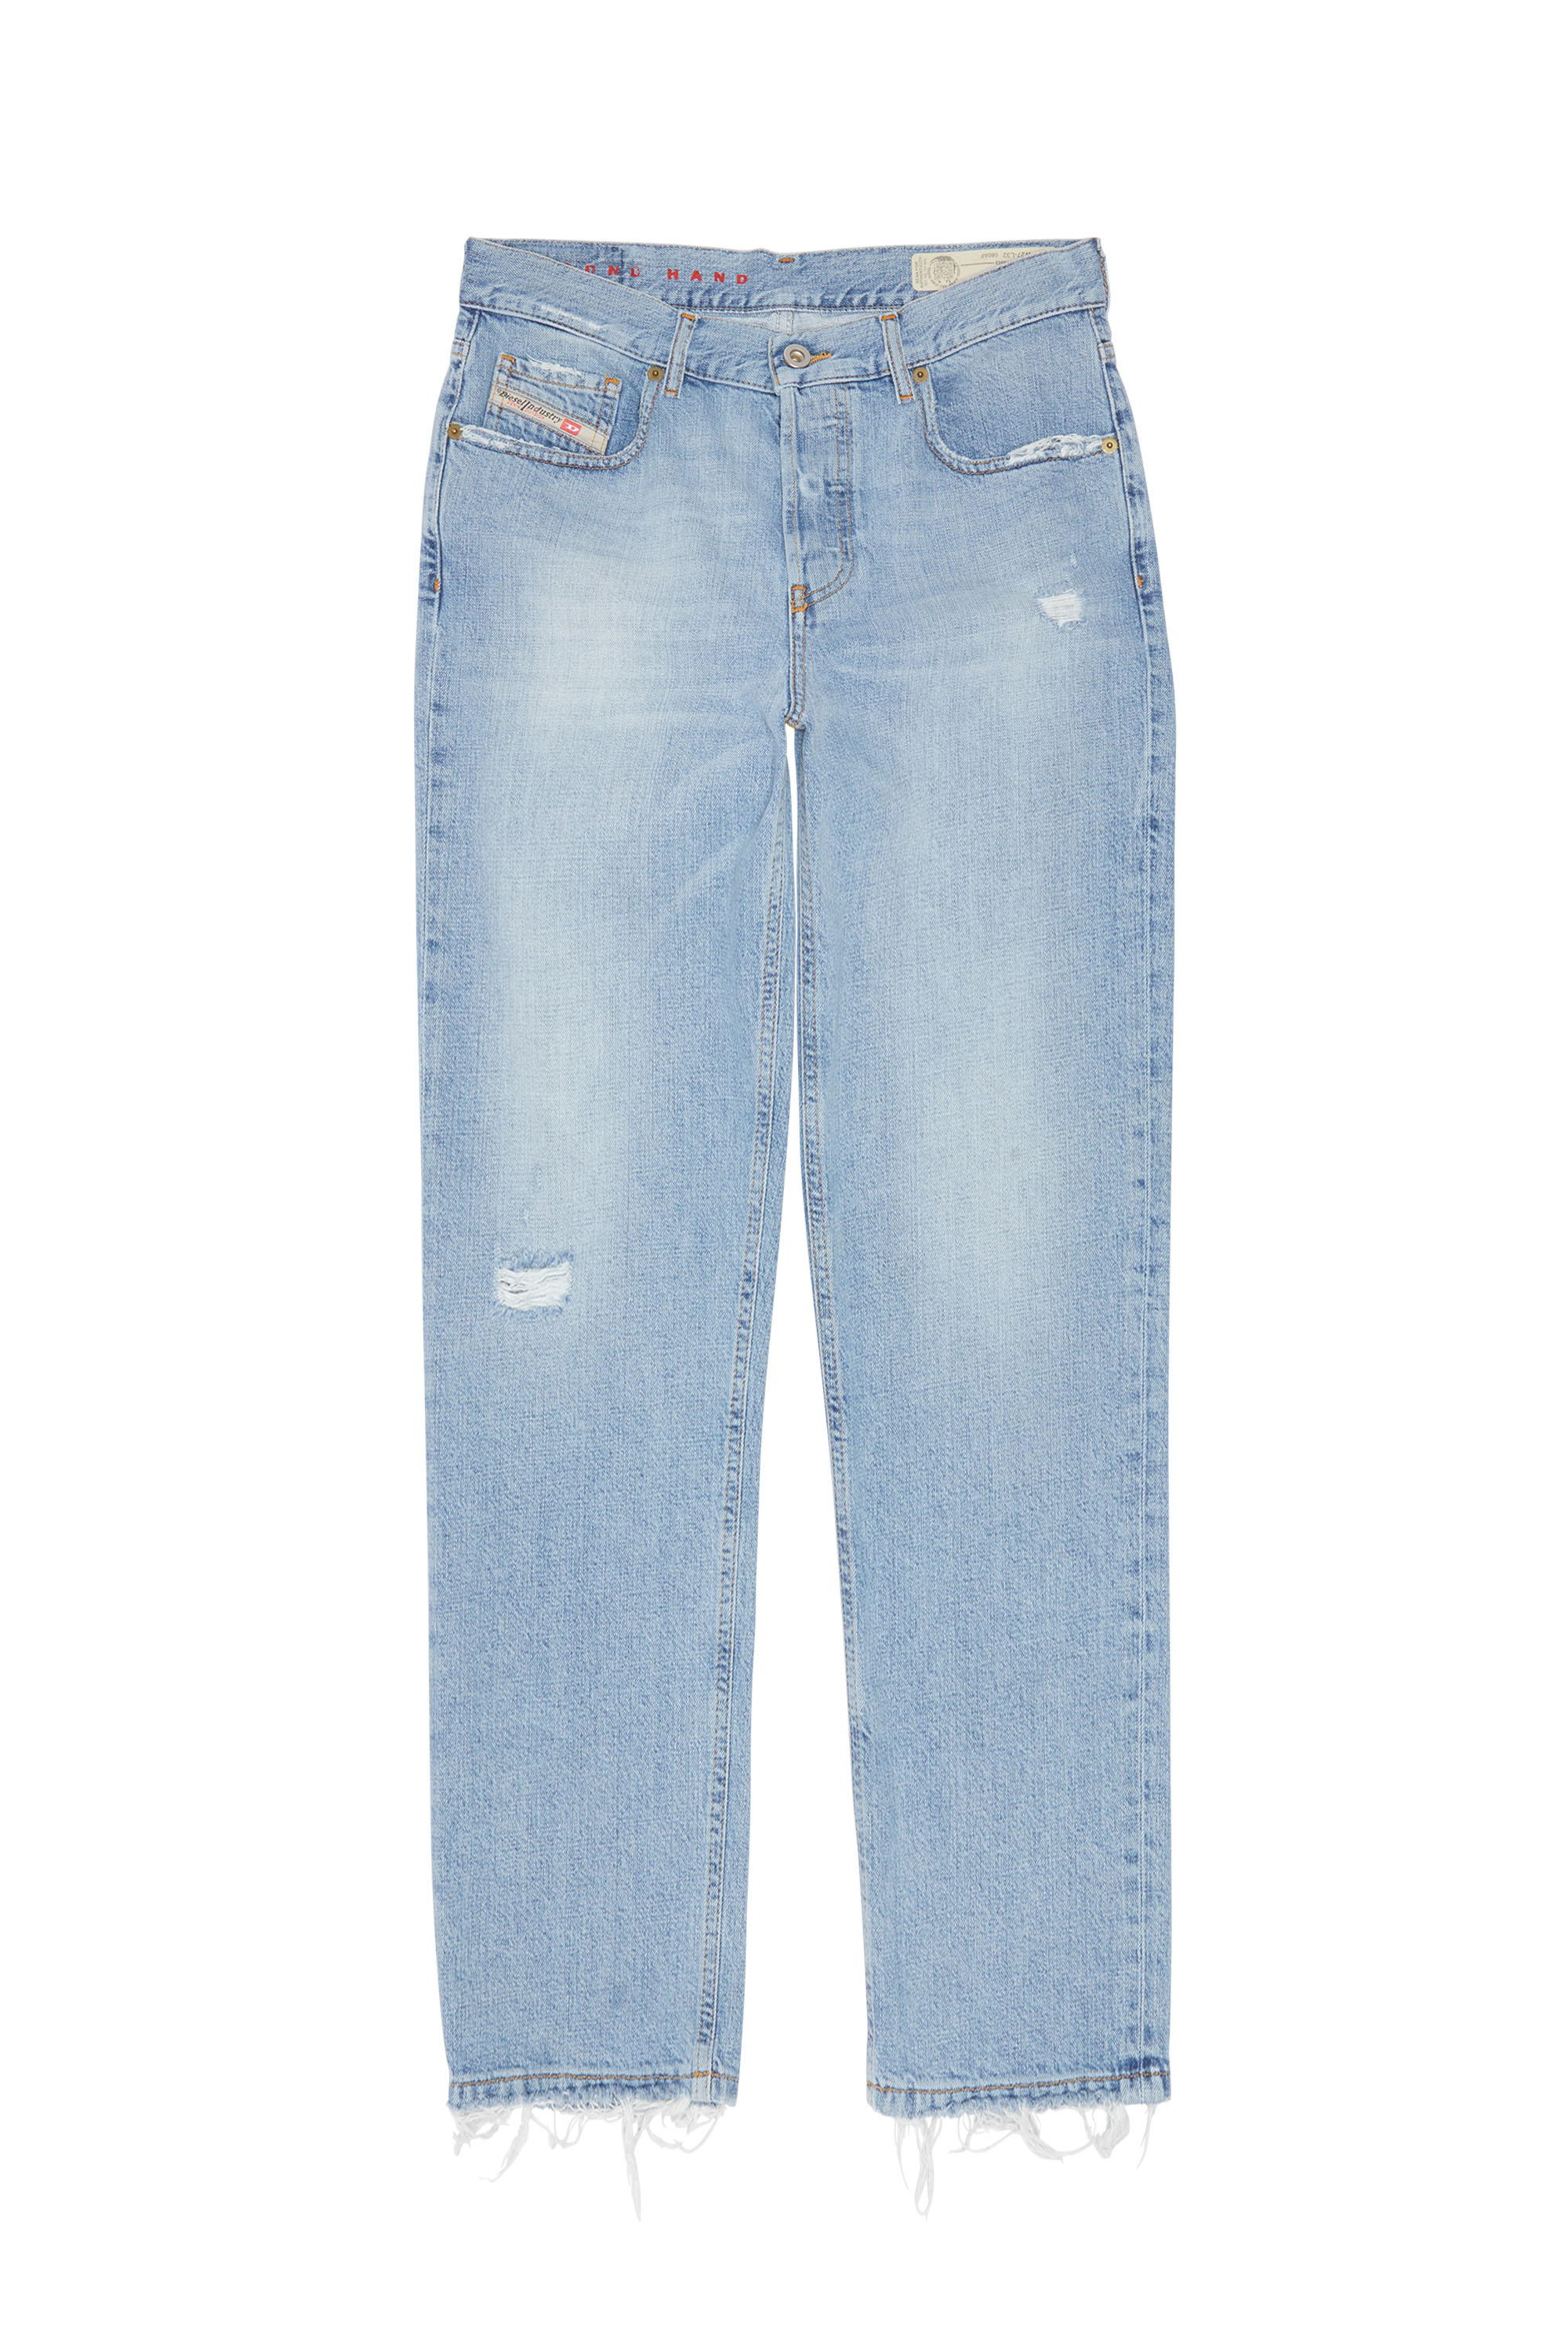 ARYEL, Light Blue - Jeans